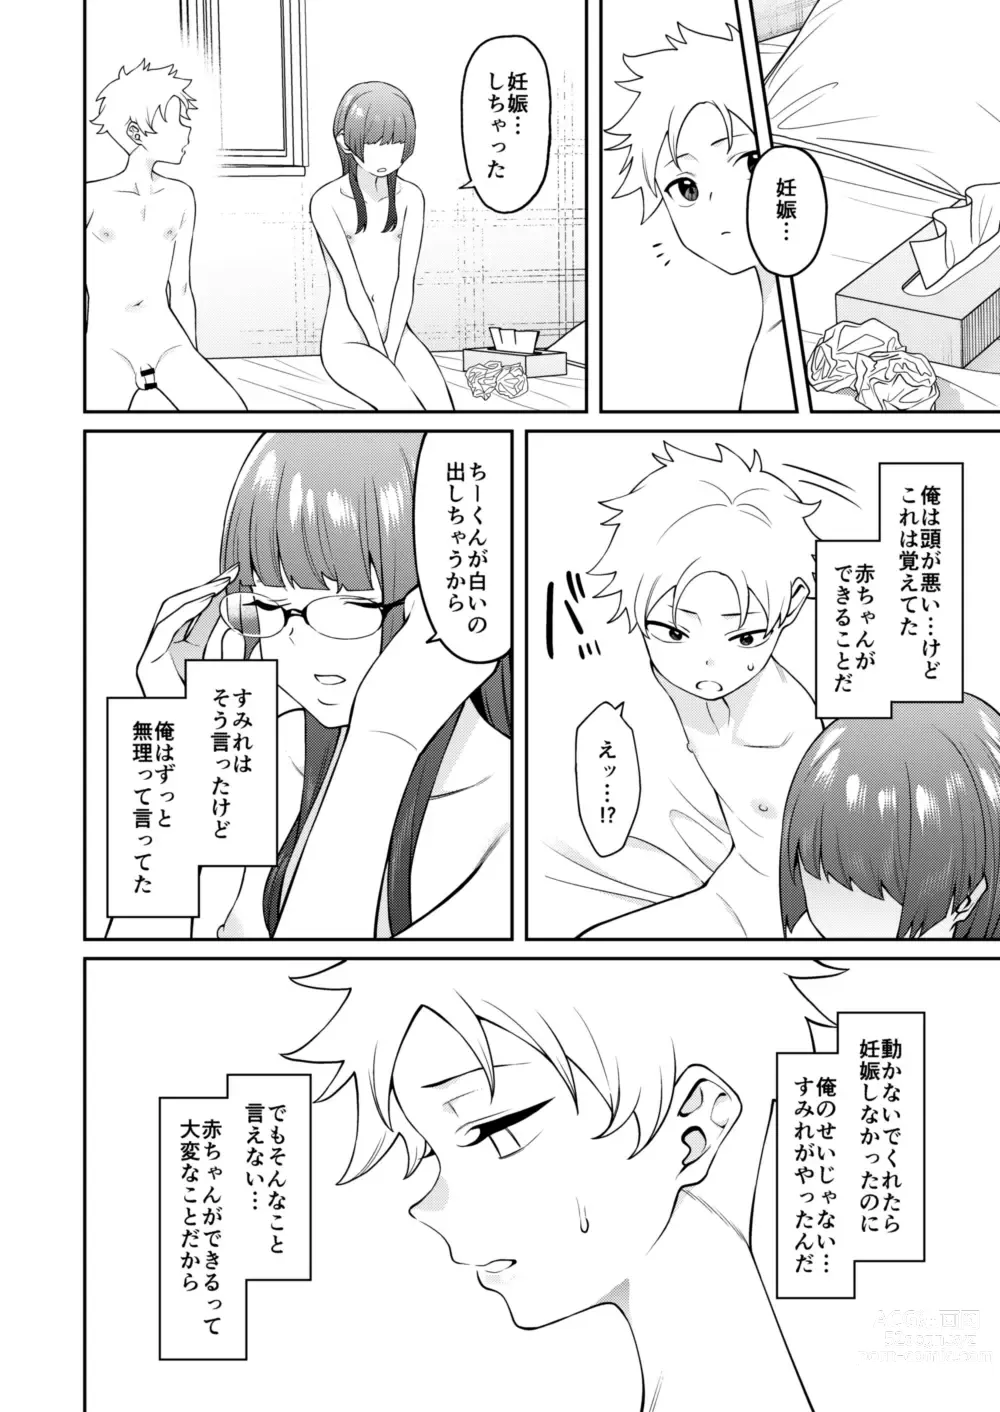 Page 27 of doujinshi Sumire-chan ha atama ga ii.